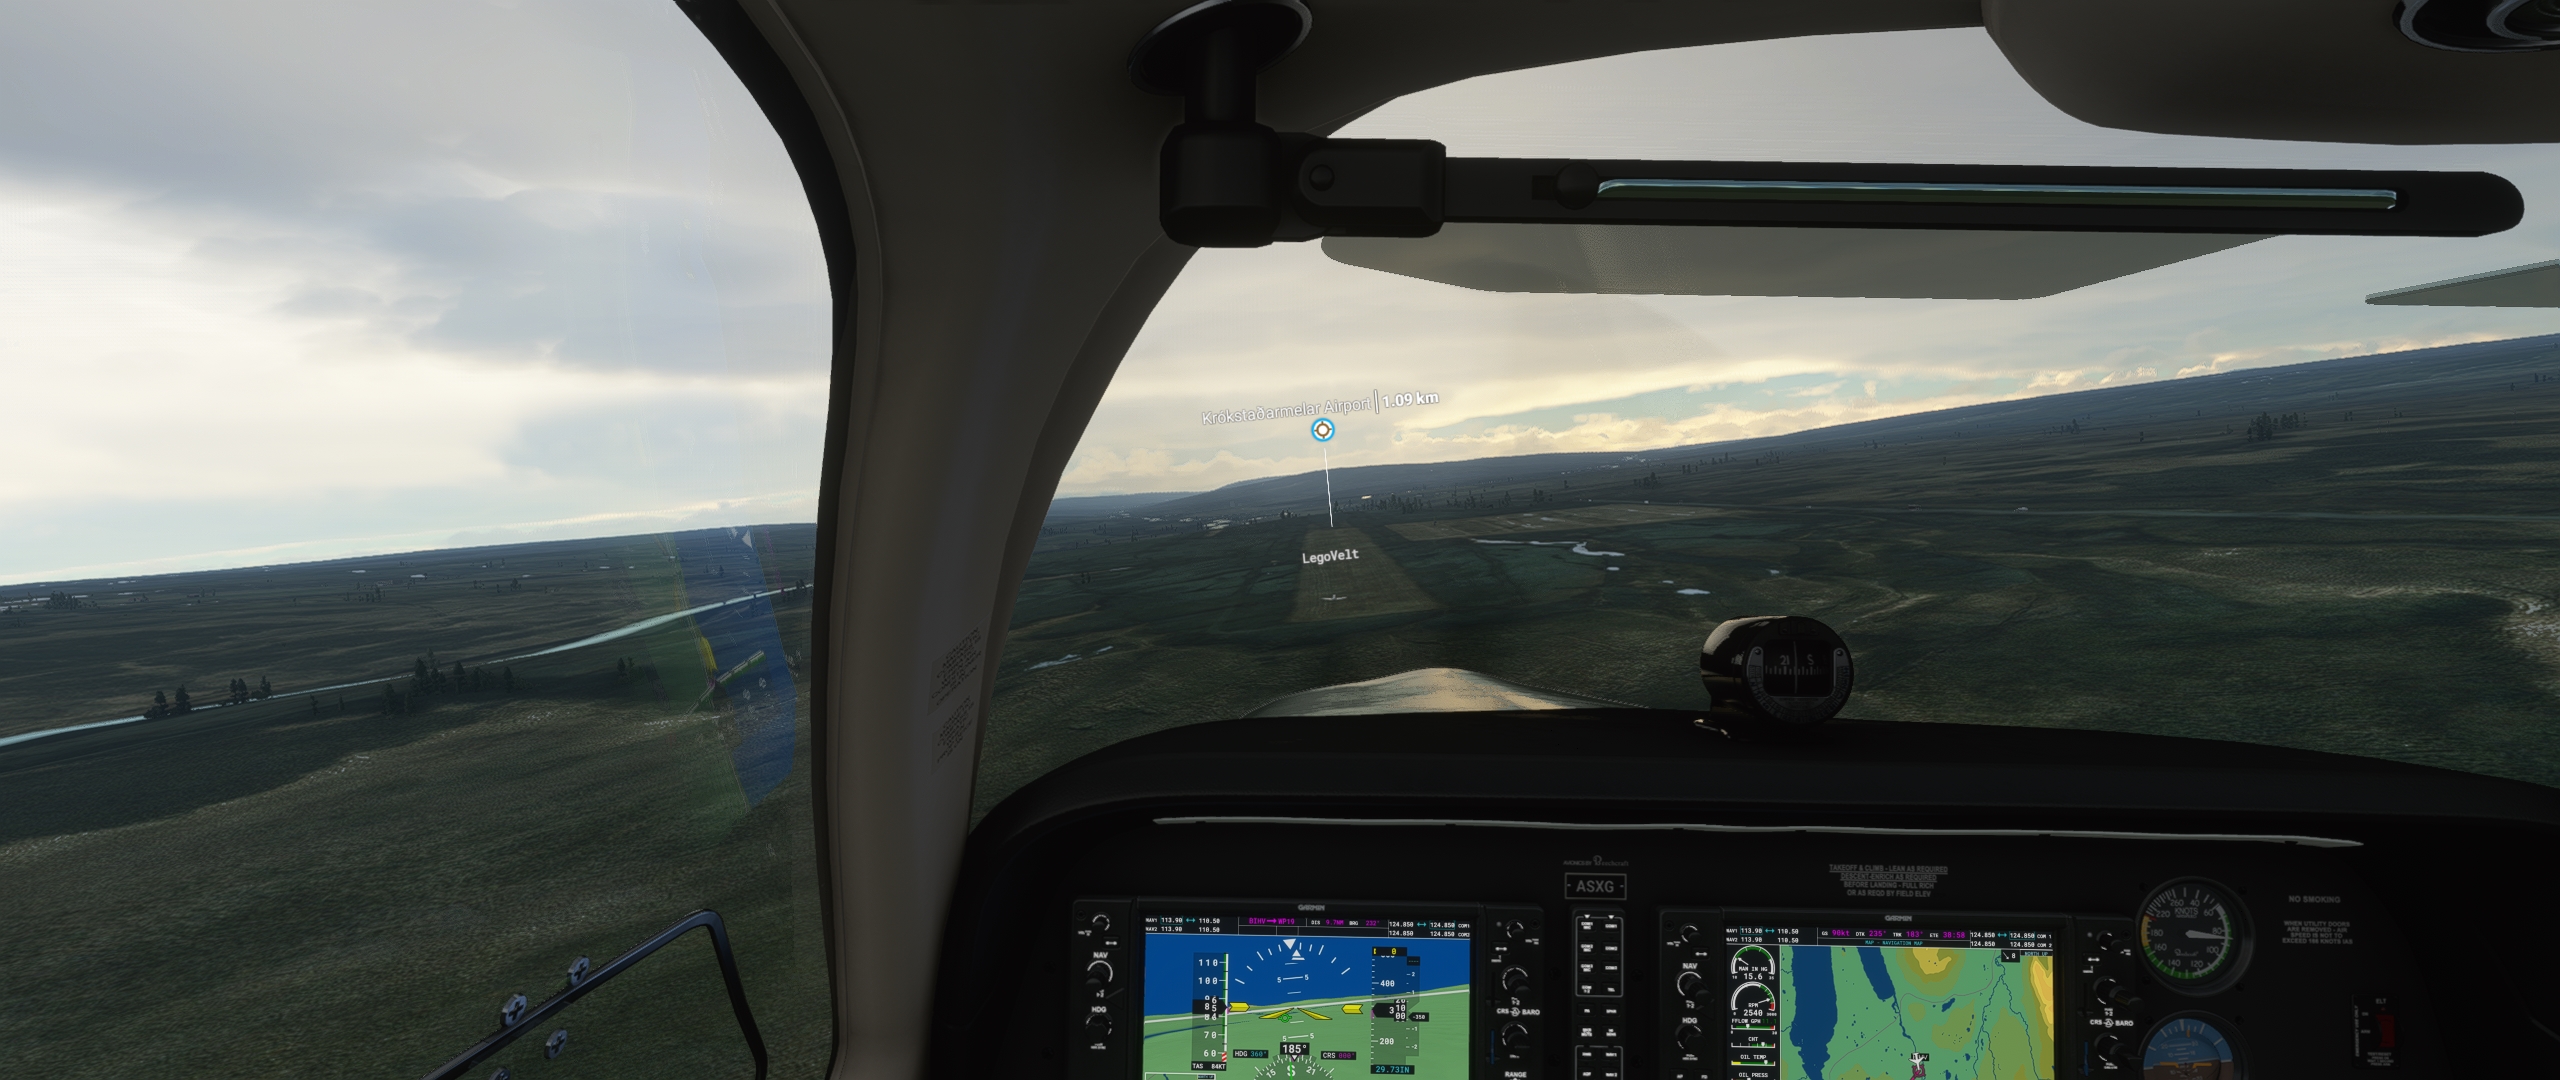 2021-02-13 18_05_02-Microsoft Flight Simulator - 1.12.13.0.jpg